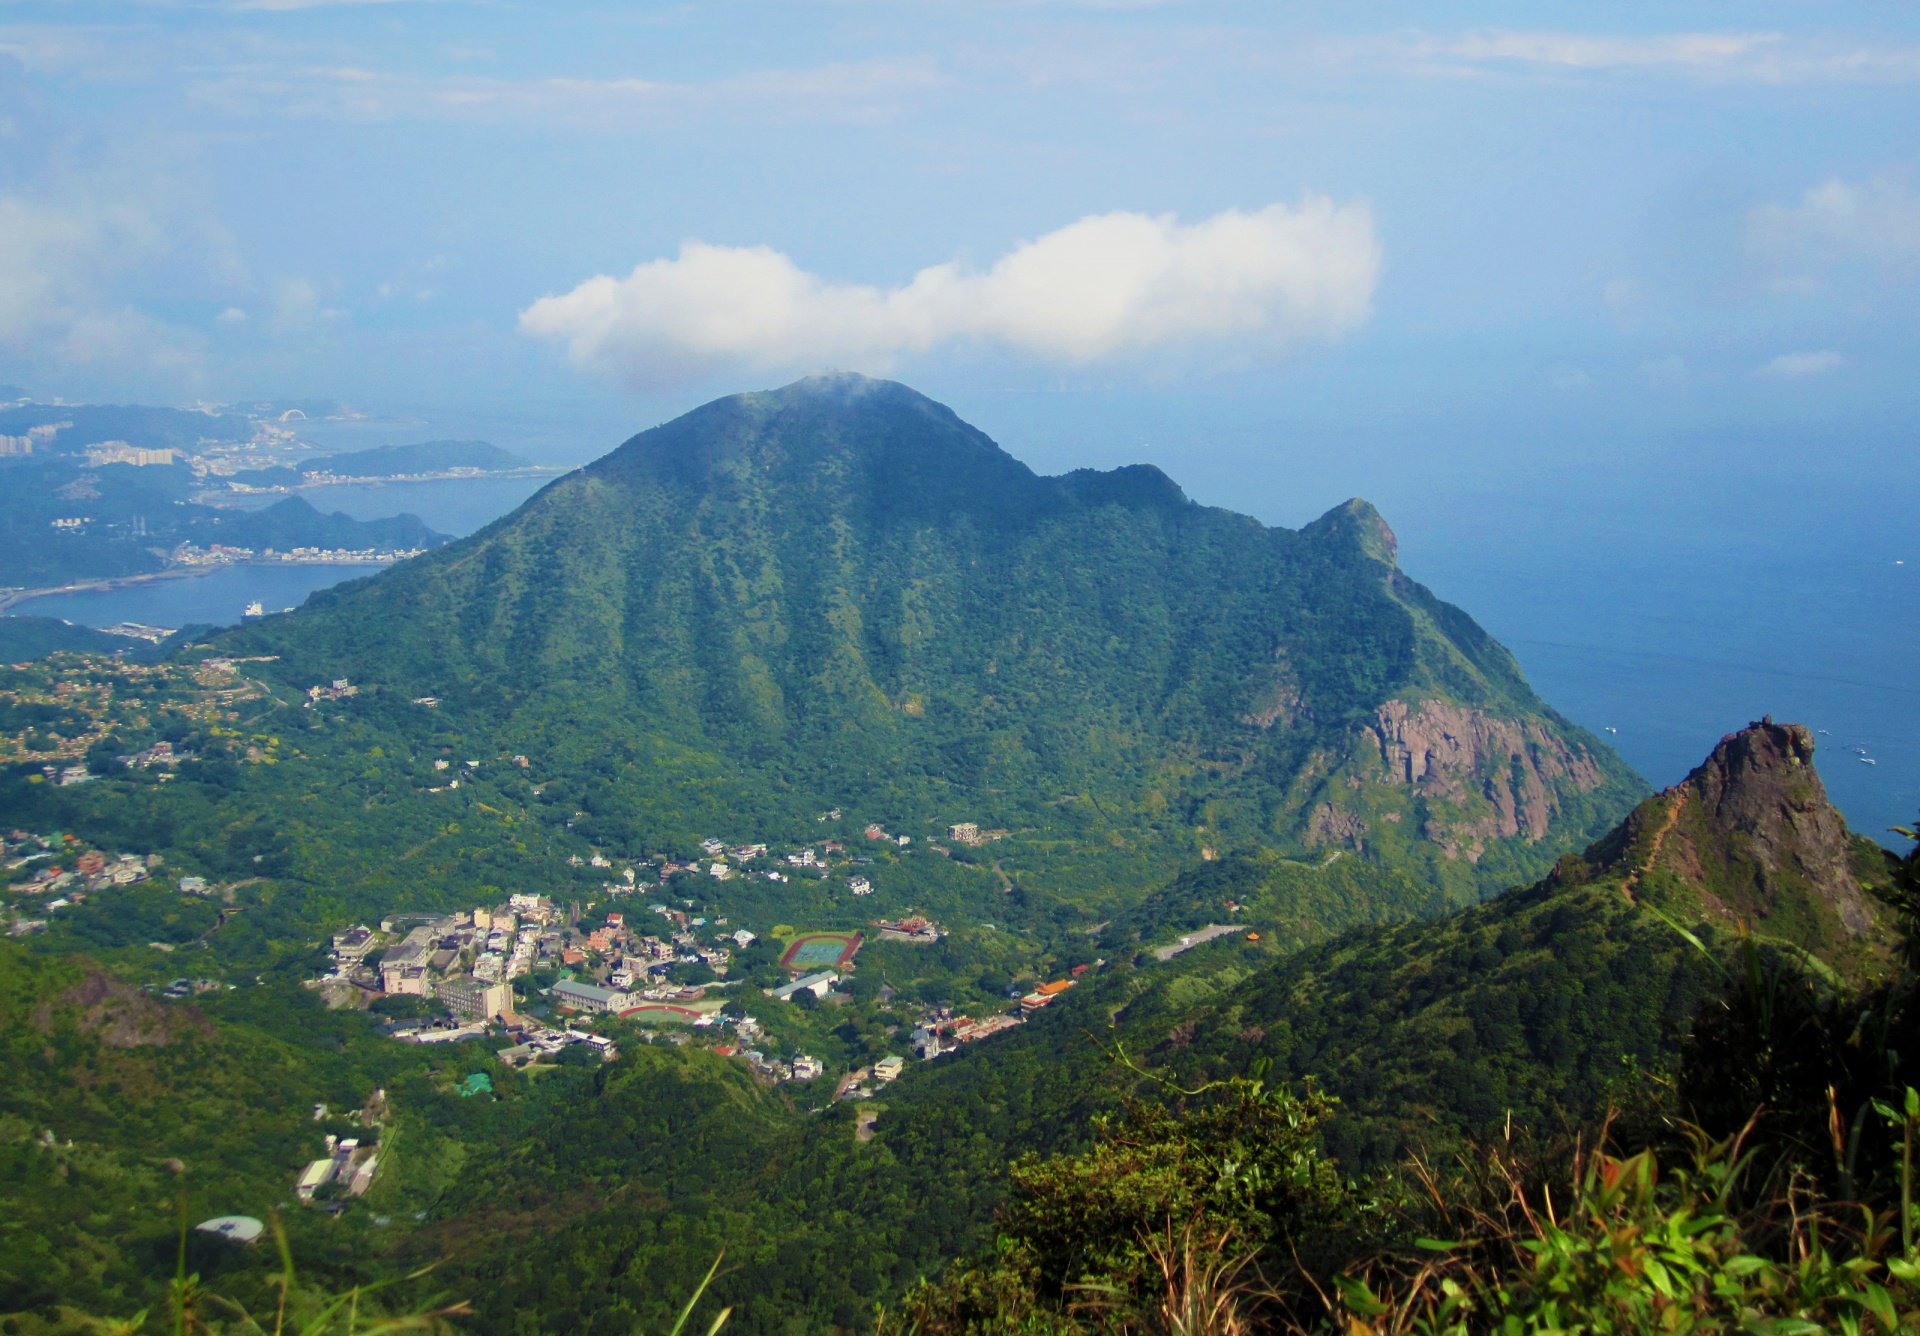 Jilongshan, a dormant volcano in Ruifang, on the north-east coast of Taiwan